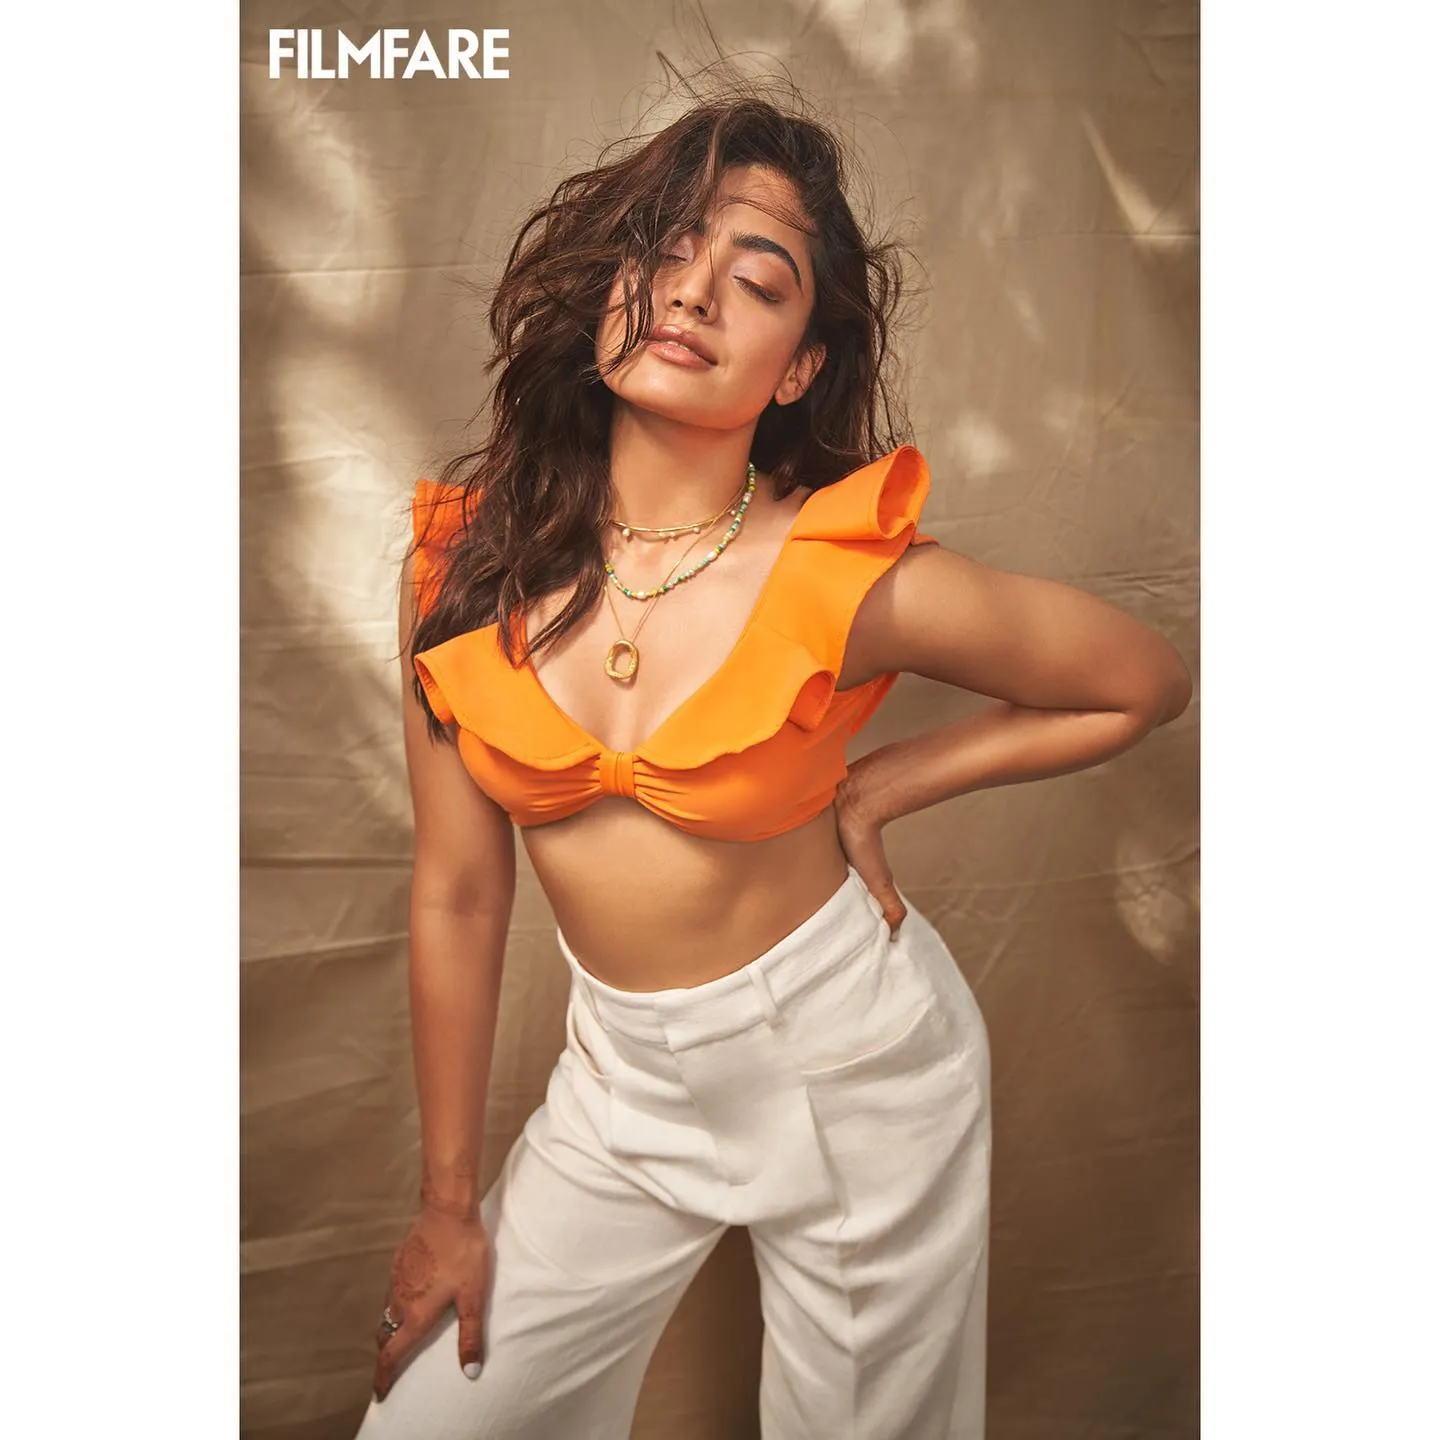 Rashmika Mandanna's glamourous look in Filmfare photoshoot raises the hotness bar